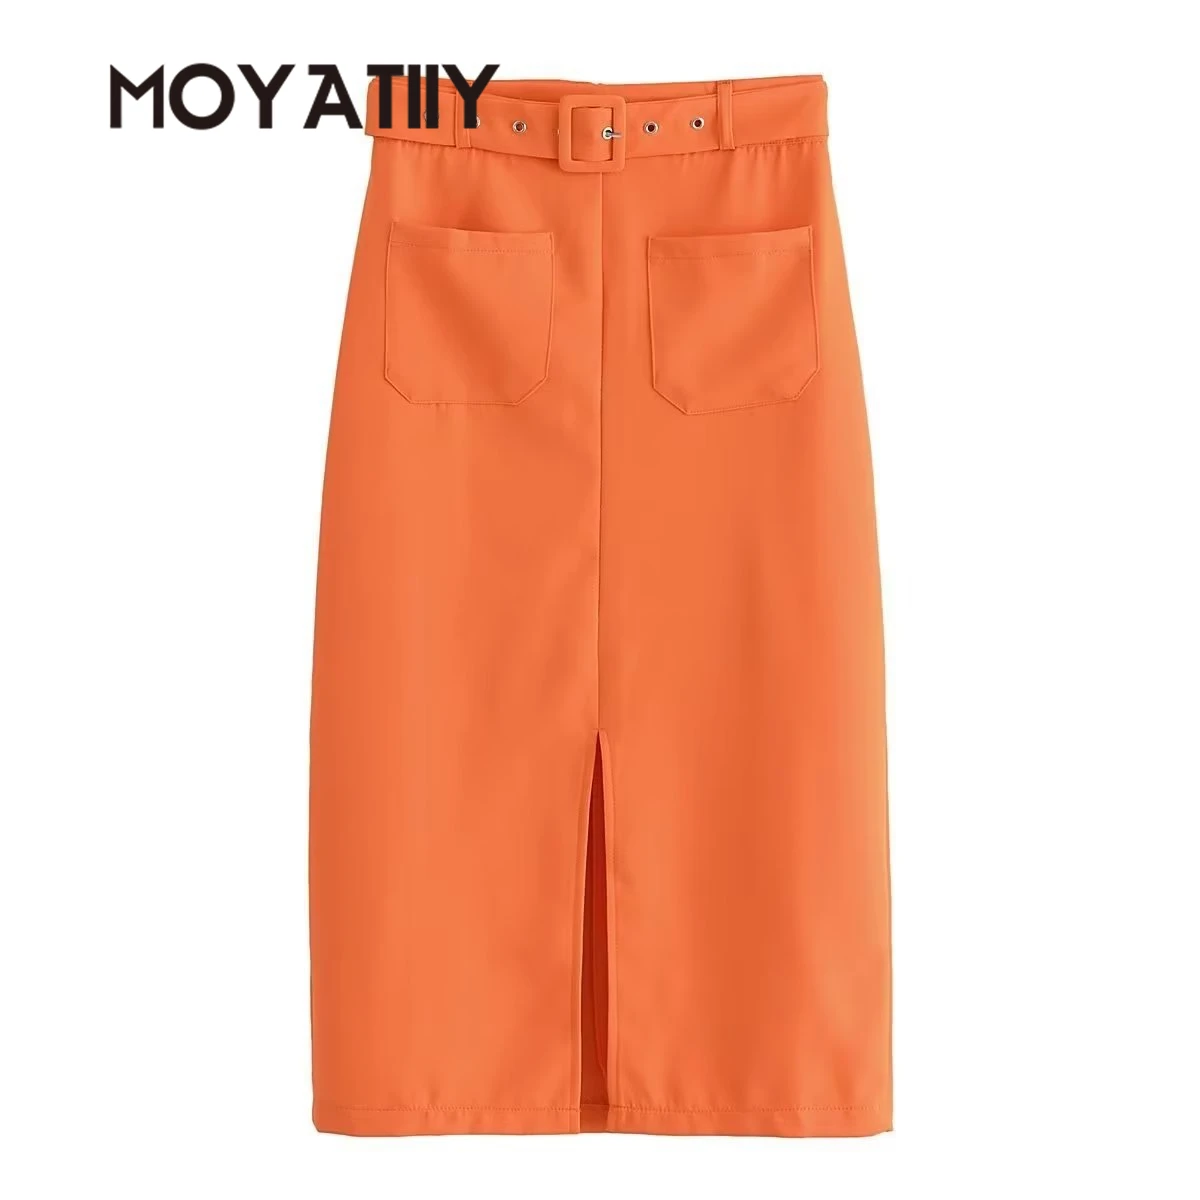 

MOYATIIY Women Skirts Fashion New Year Orange Slim Midi Skirts with Belt Office Ladies Female Bottoms